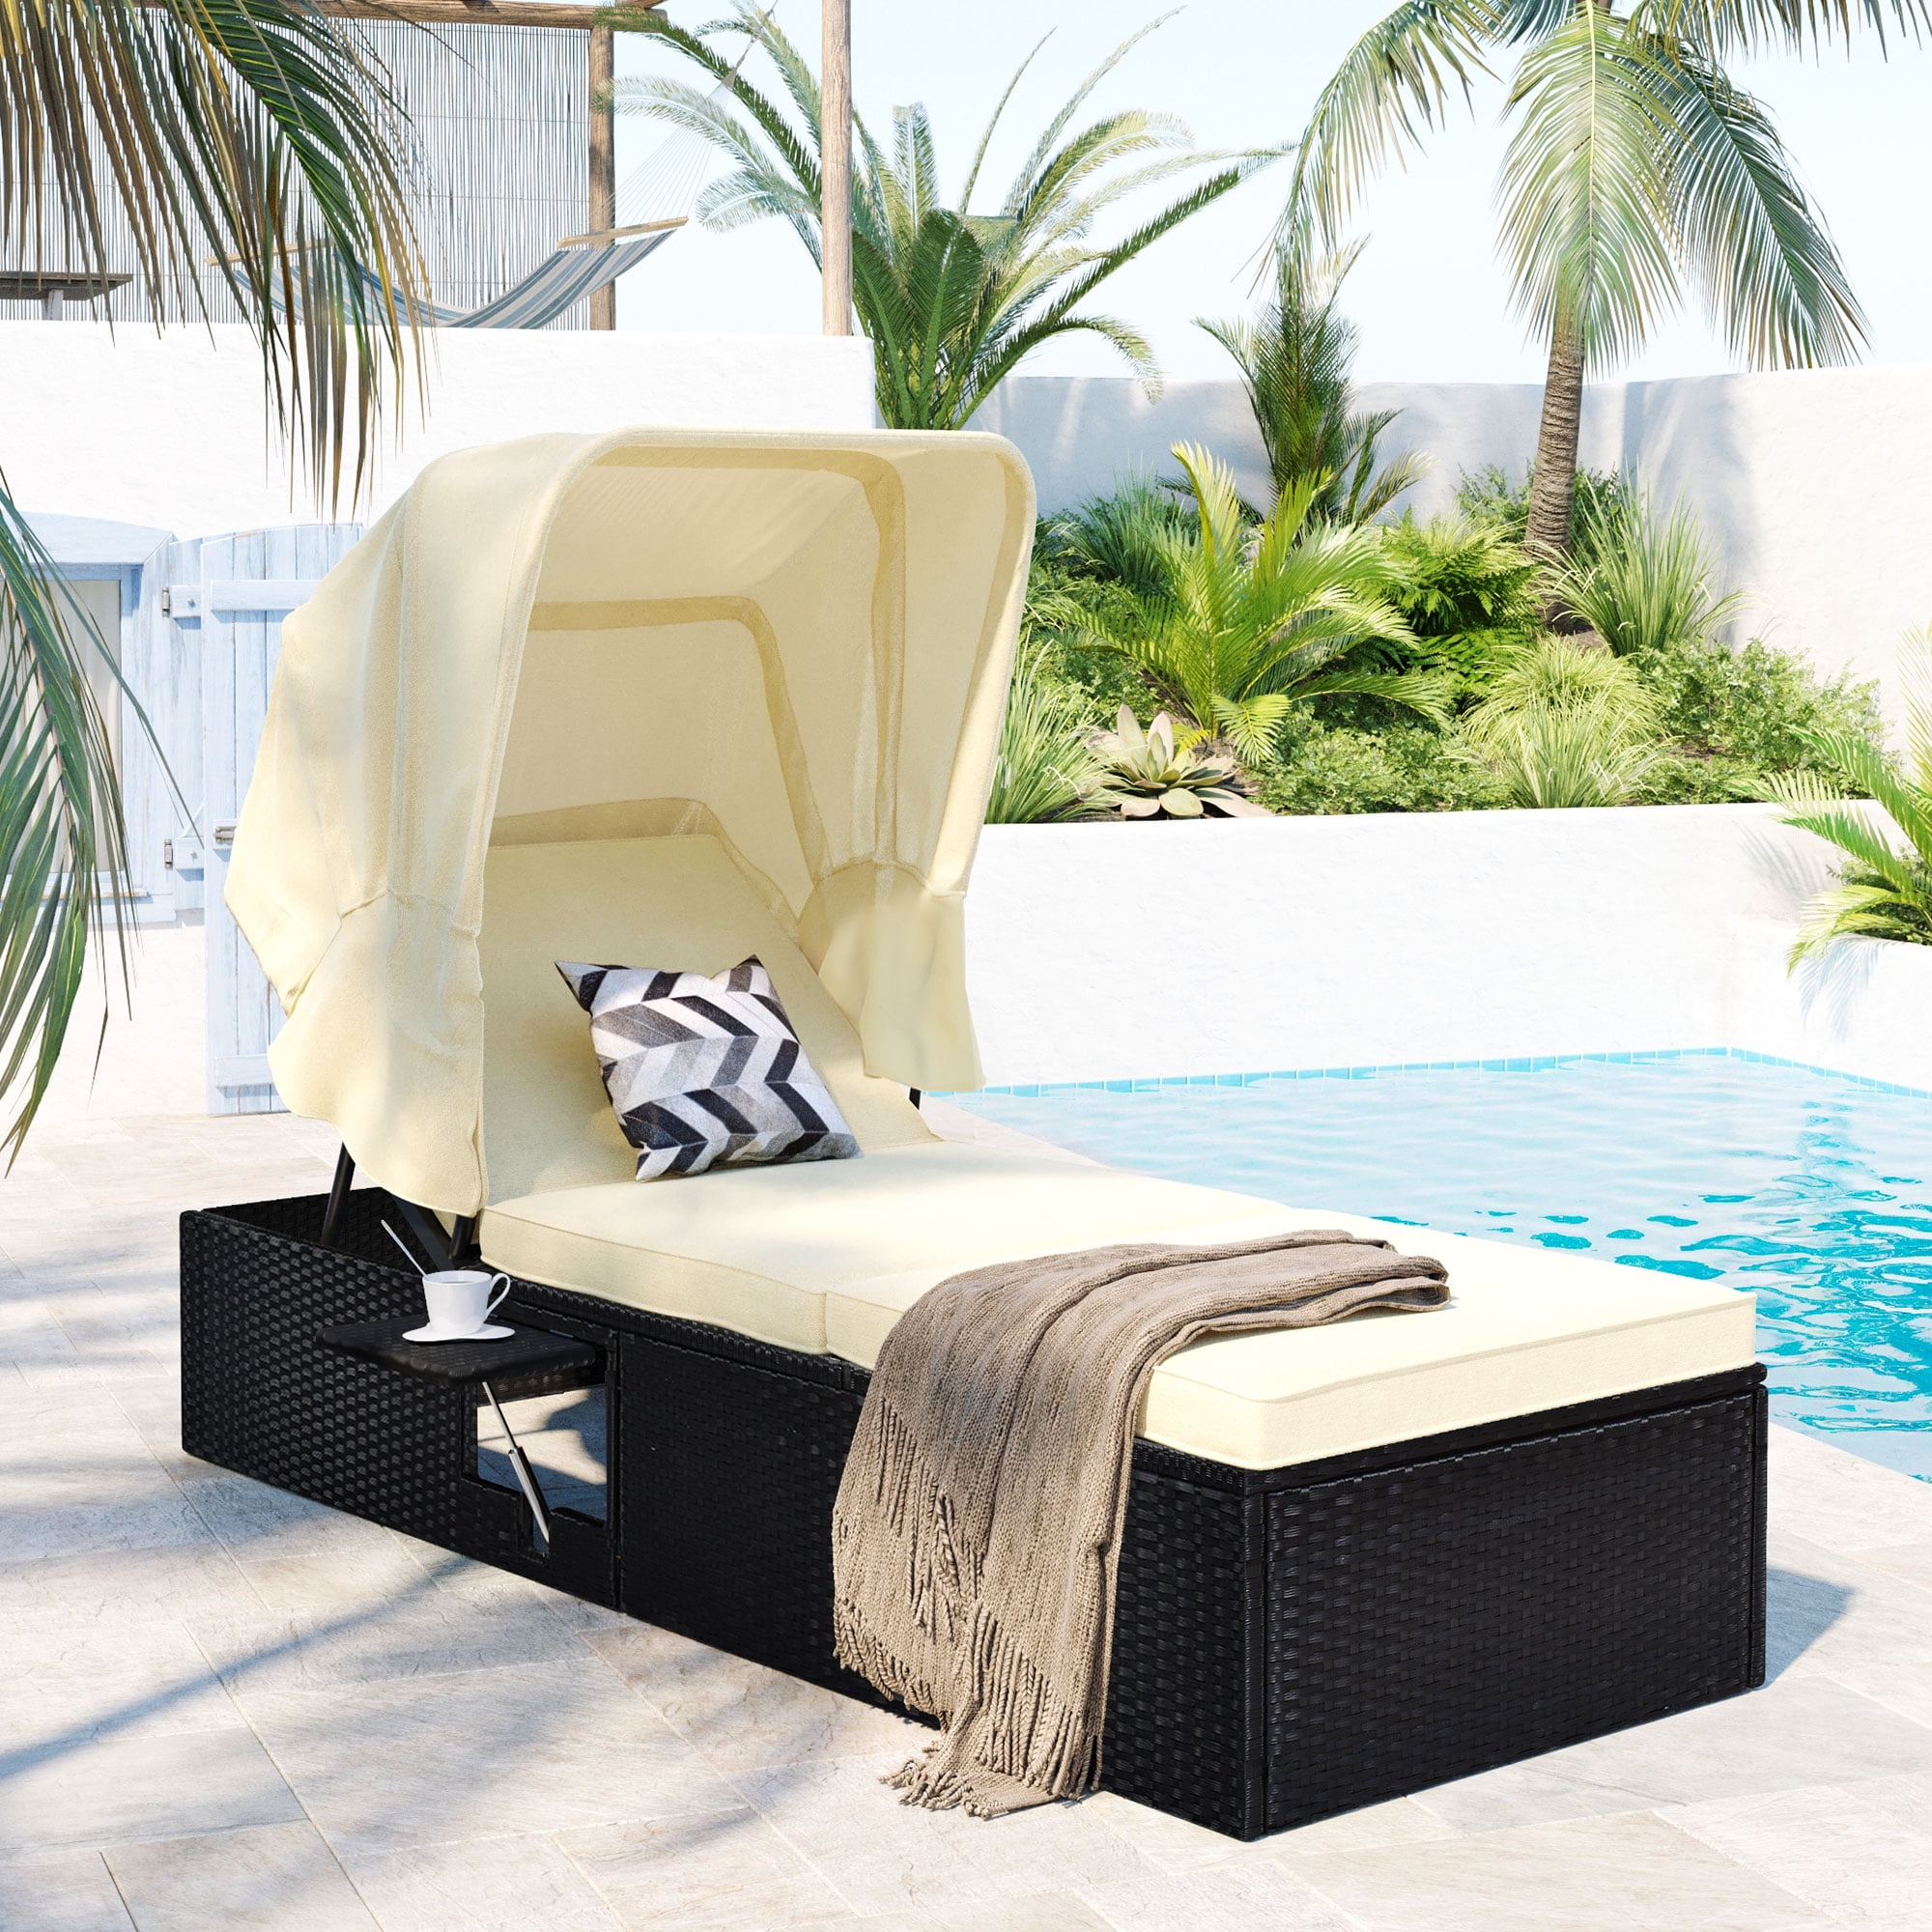 Rattan Garden Double Bed Lounger Brown Waterproof Sofa Sunlounger Recliner Patio Terrace Sunbed